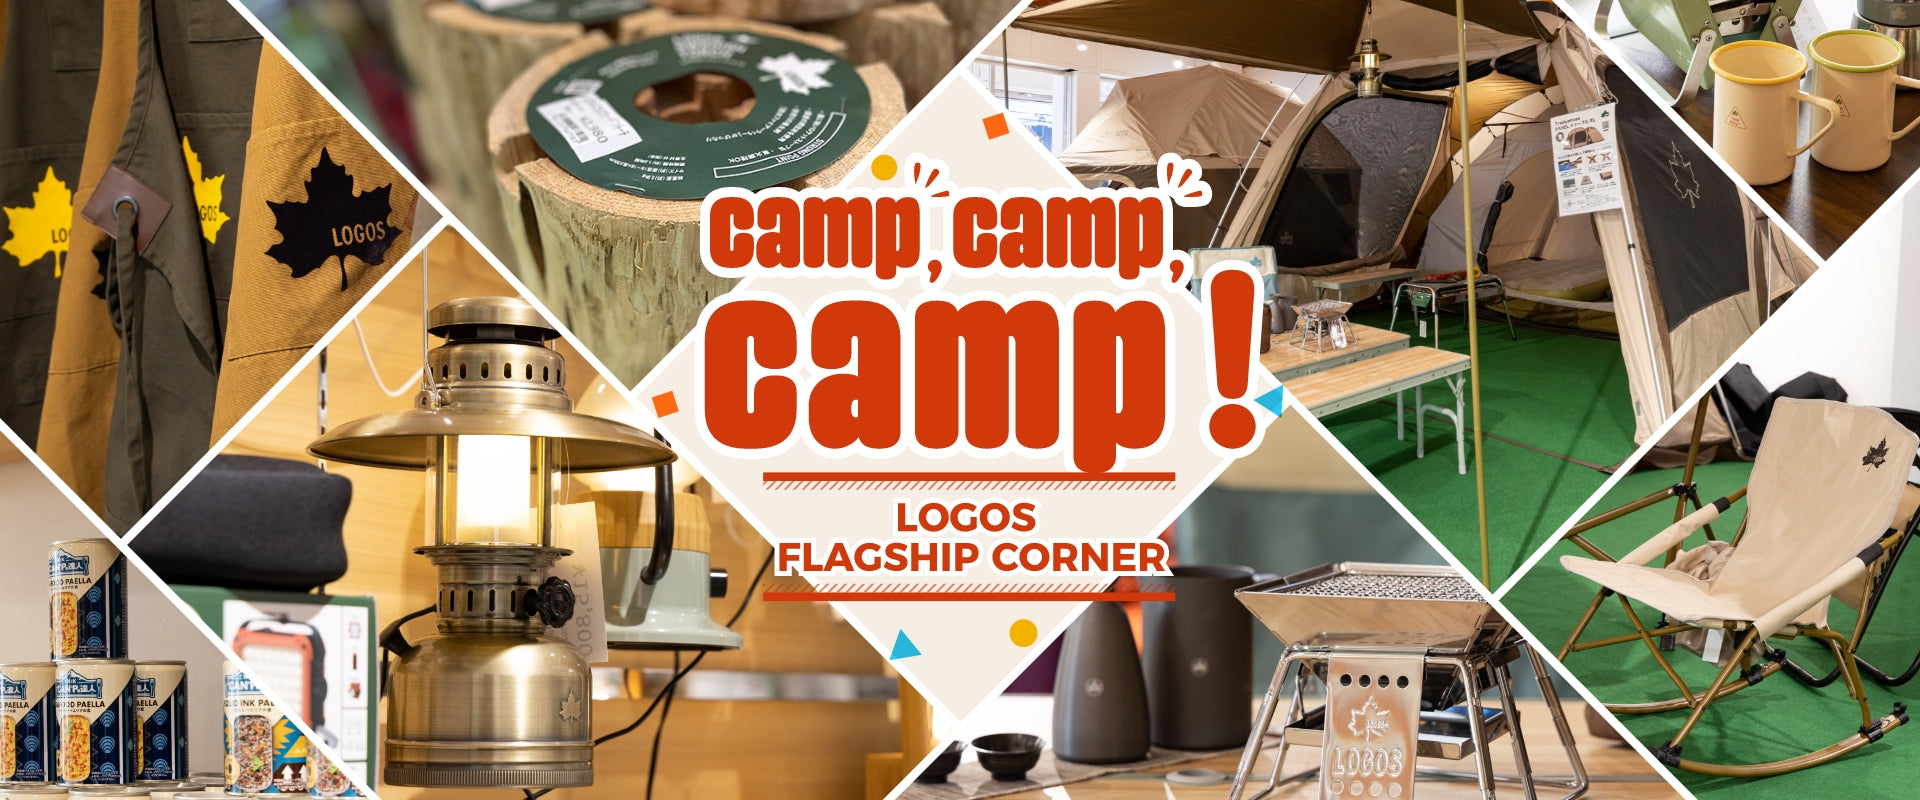 camp,camp,camp! LOGOS FLAGSHIP CORNER